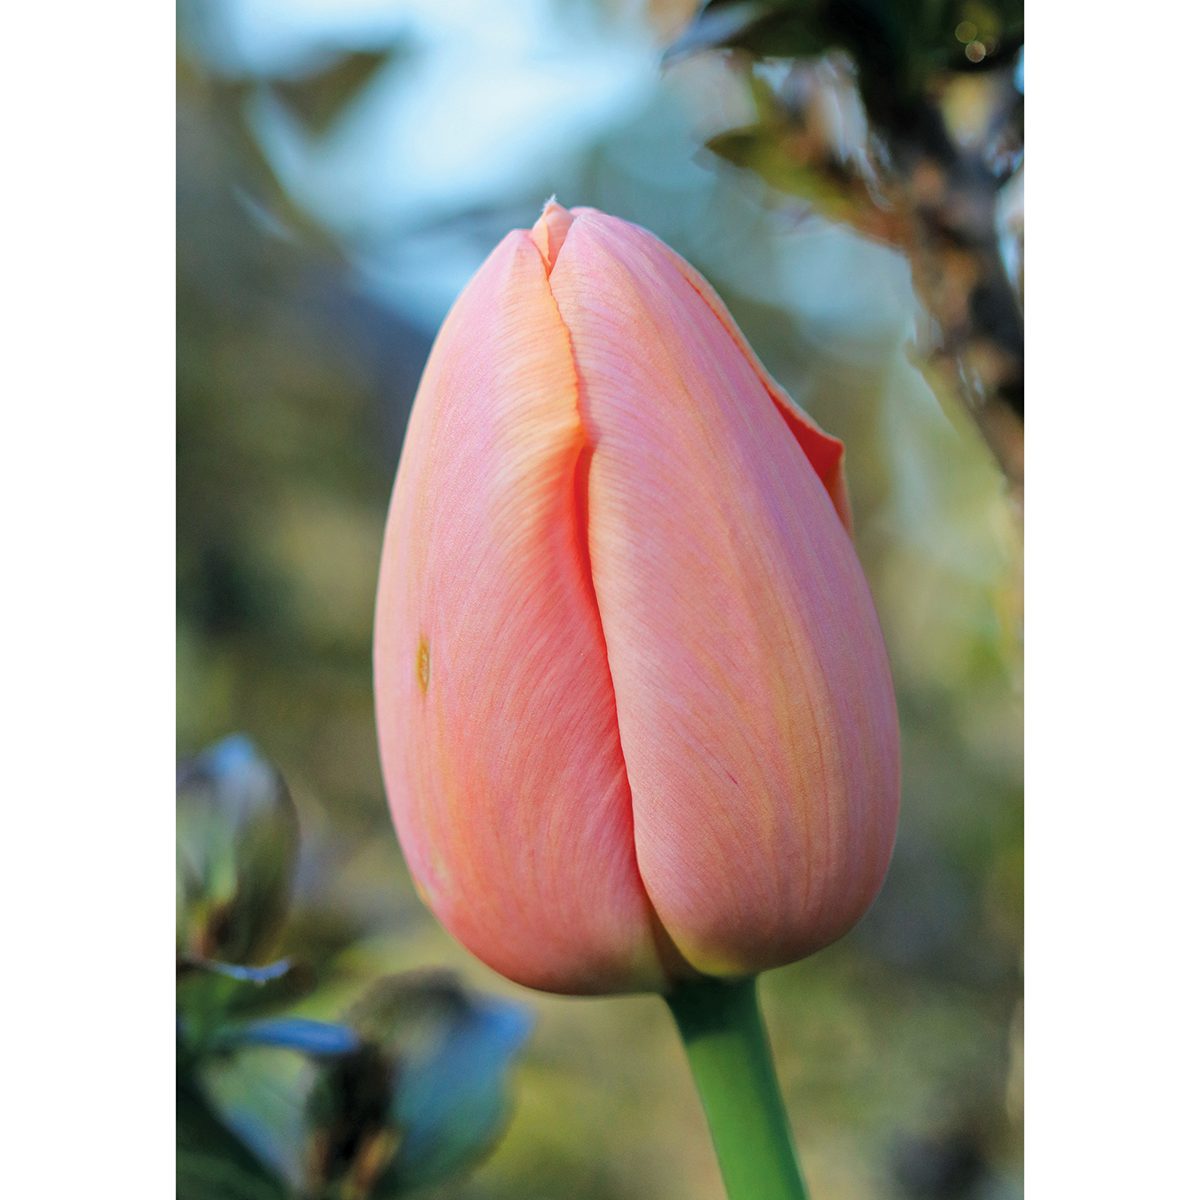 Flower Picture Gallery - Peach Tulip